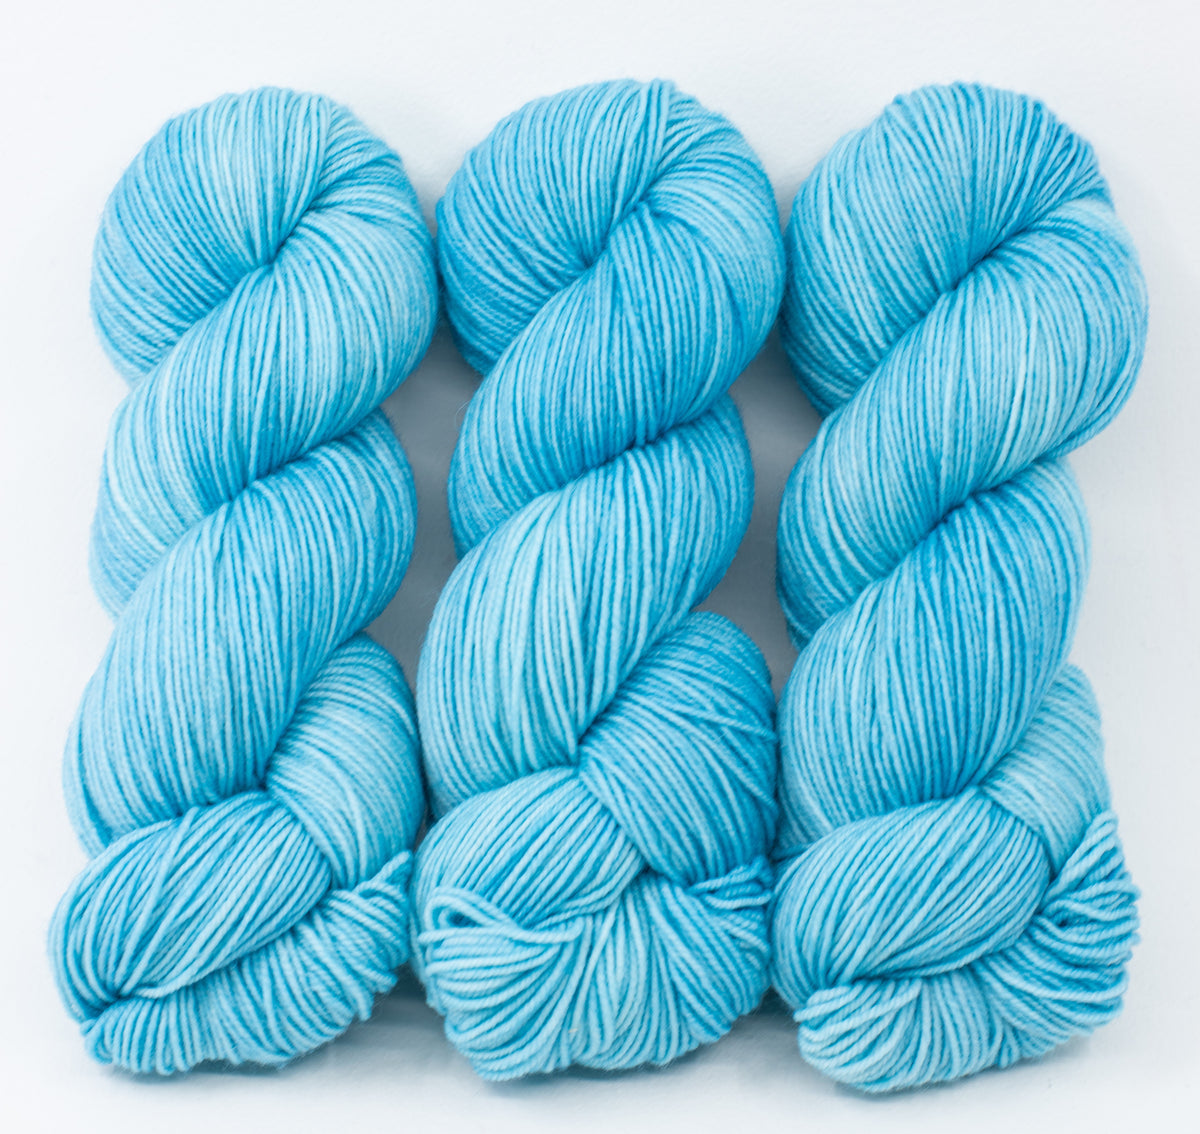 Water Lily Blue - Socknado Fingering - Dyed Stock